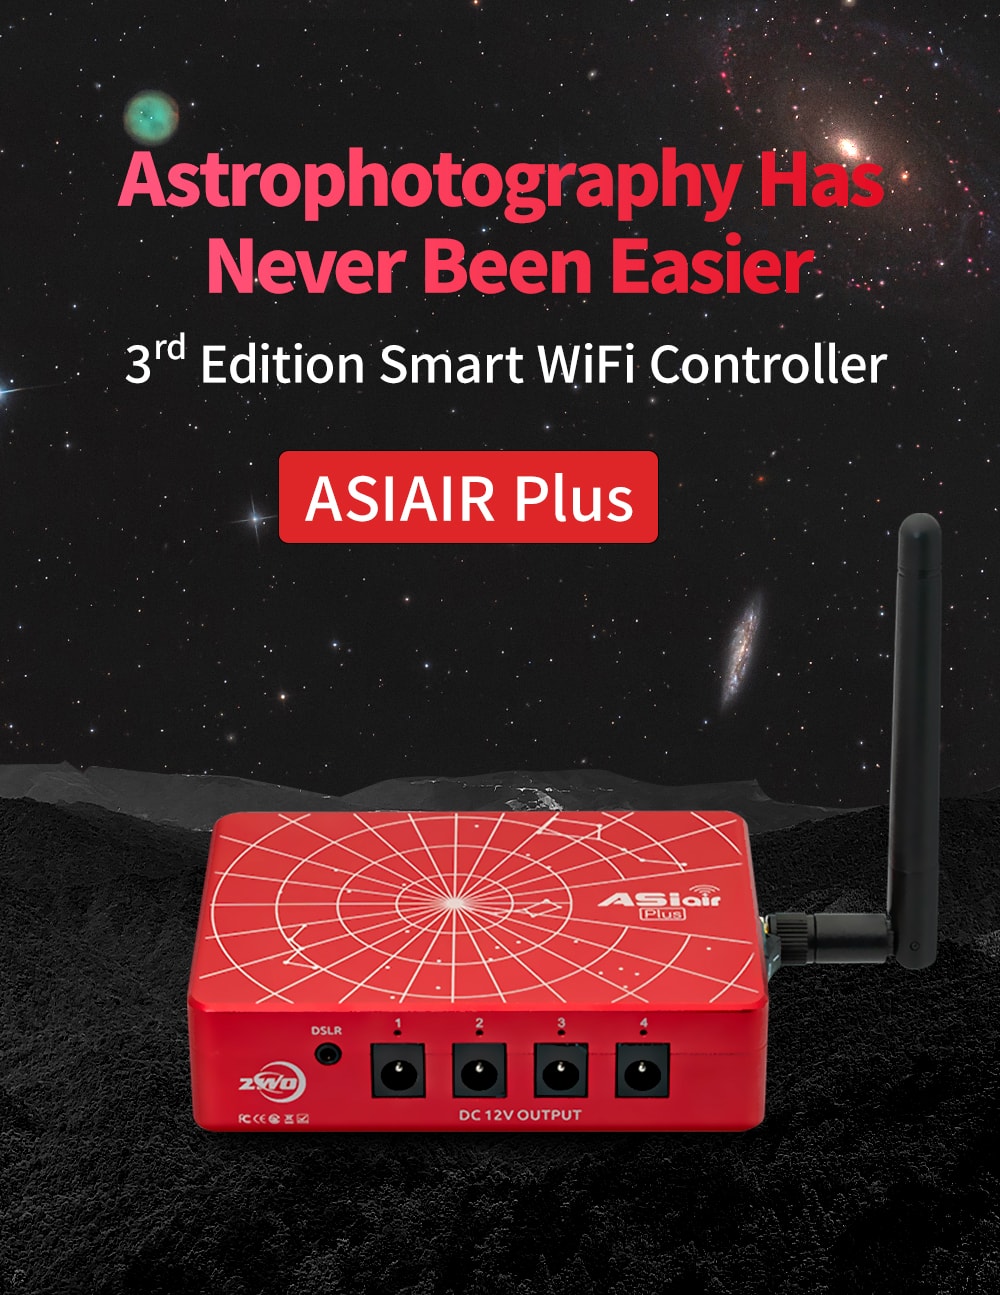 ASIAIR Plus wireless controller